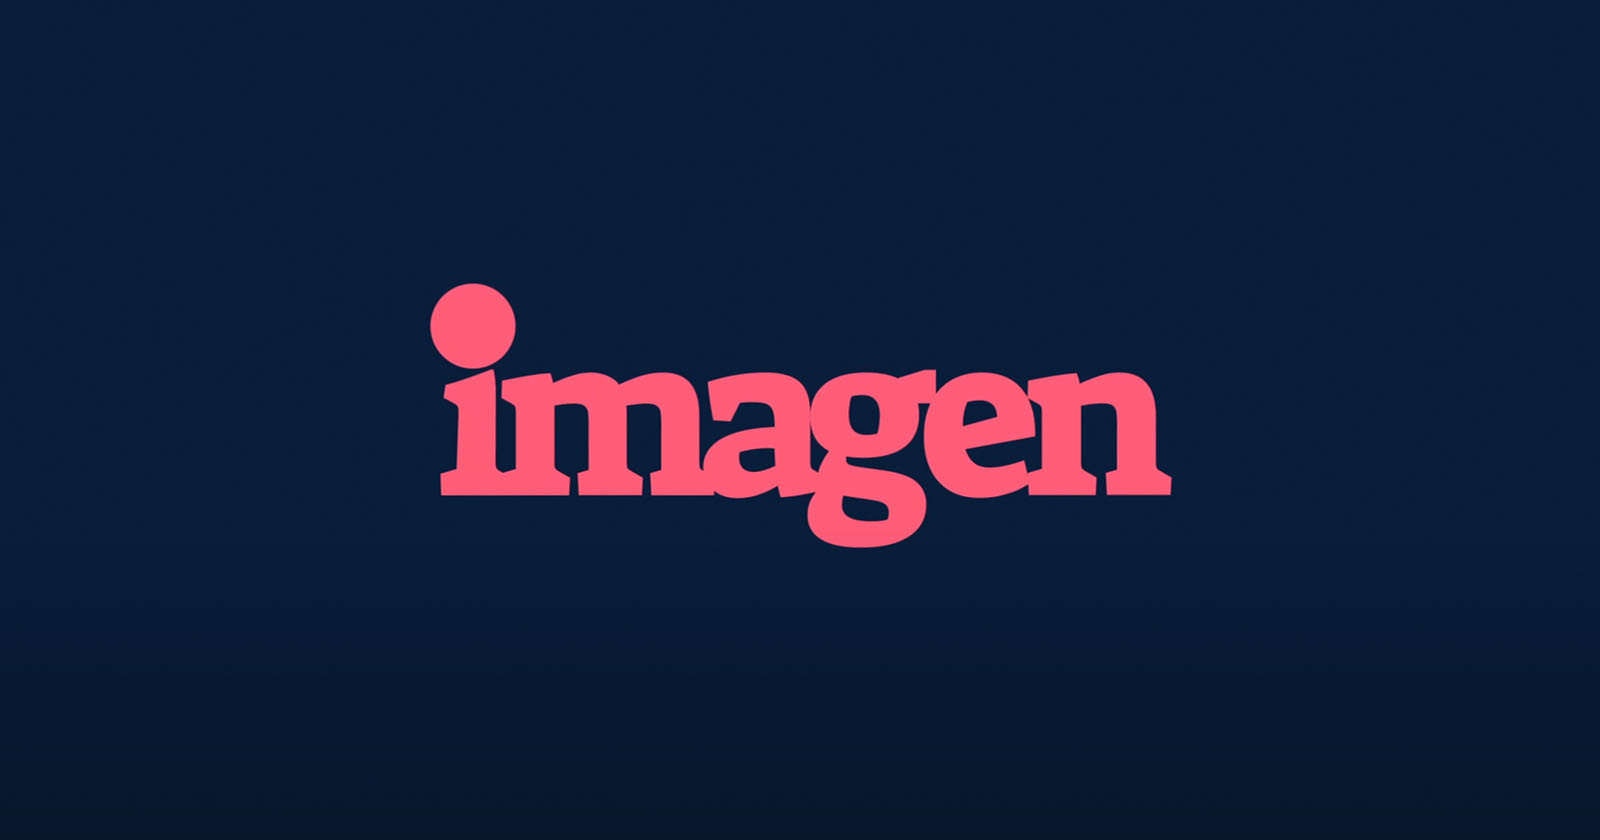 ImagenAI Adds Subject Mask AI Tool and Profile Sharing Capabilities